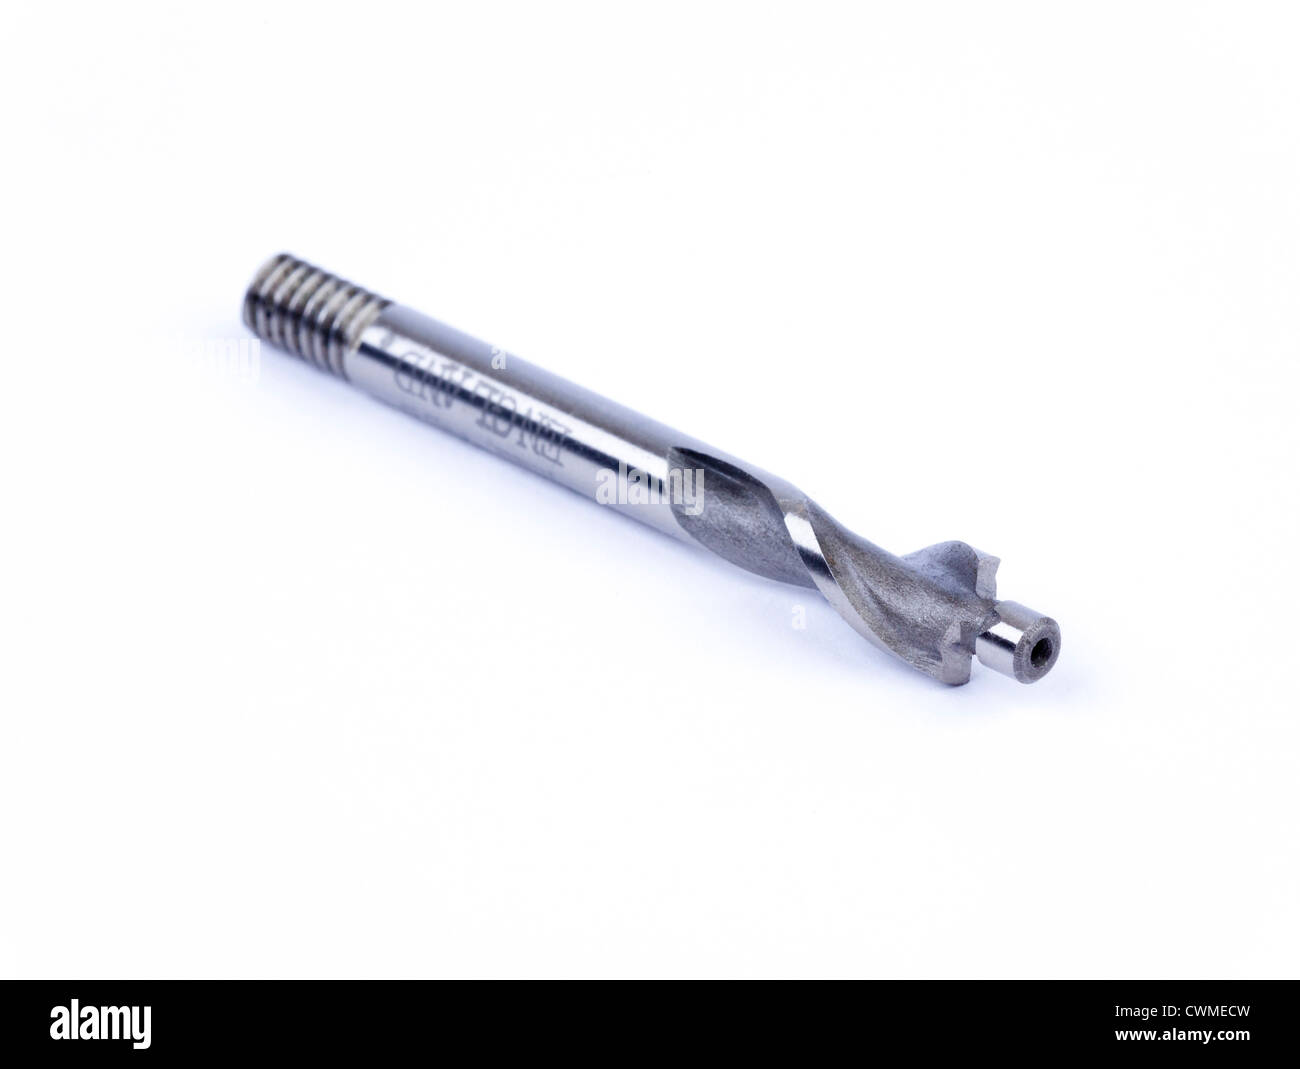 counterbore drill bit tool Stock Photo